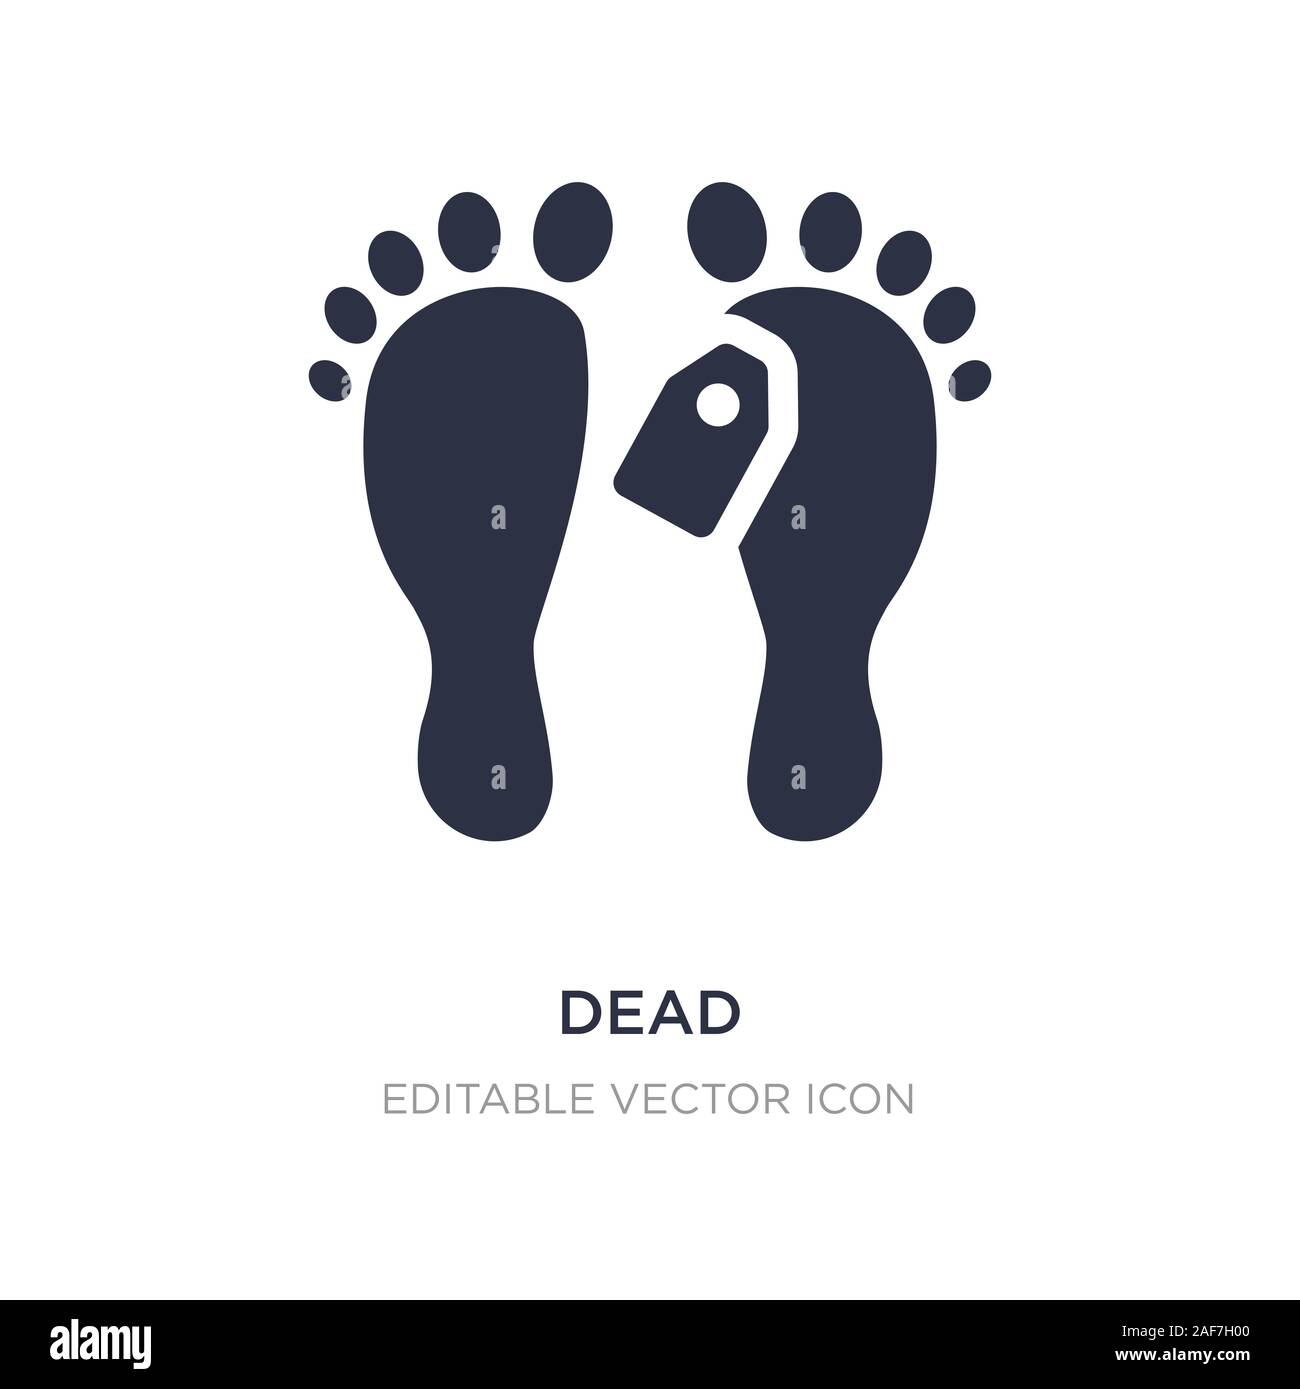 Dead icon